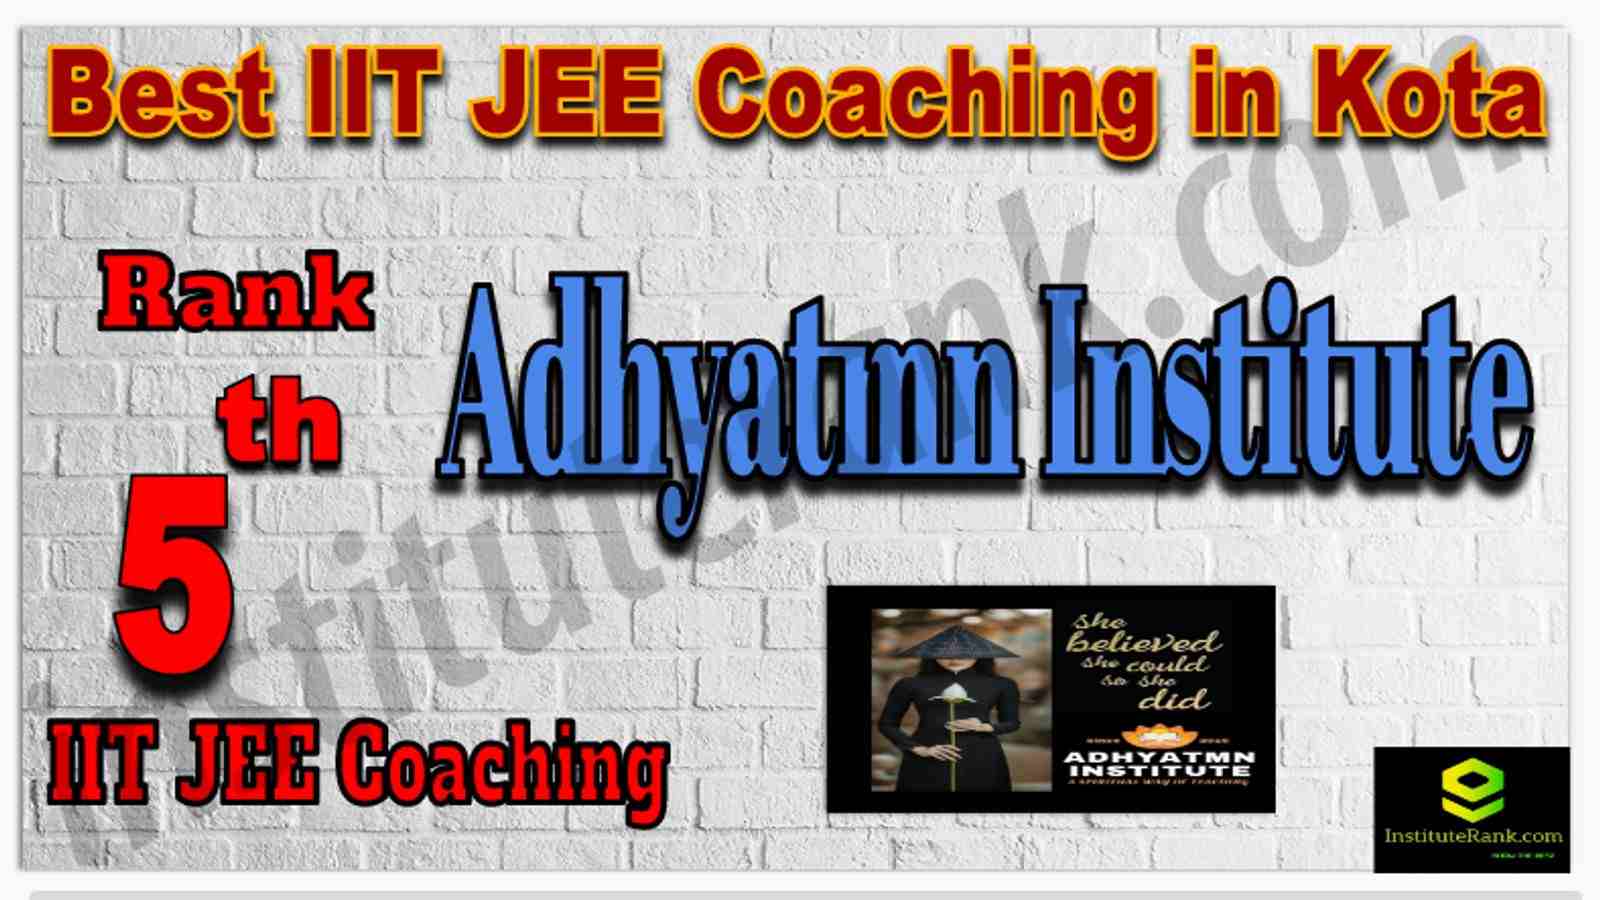 Rank 5th Best IIT JEE Coaching in Kota